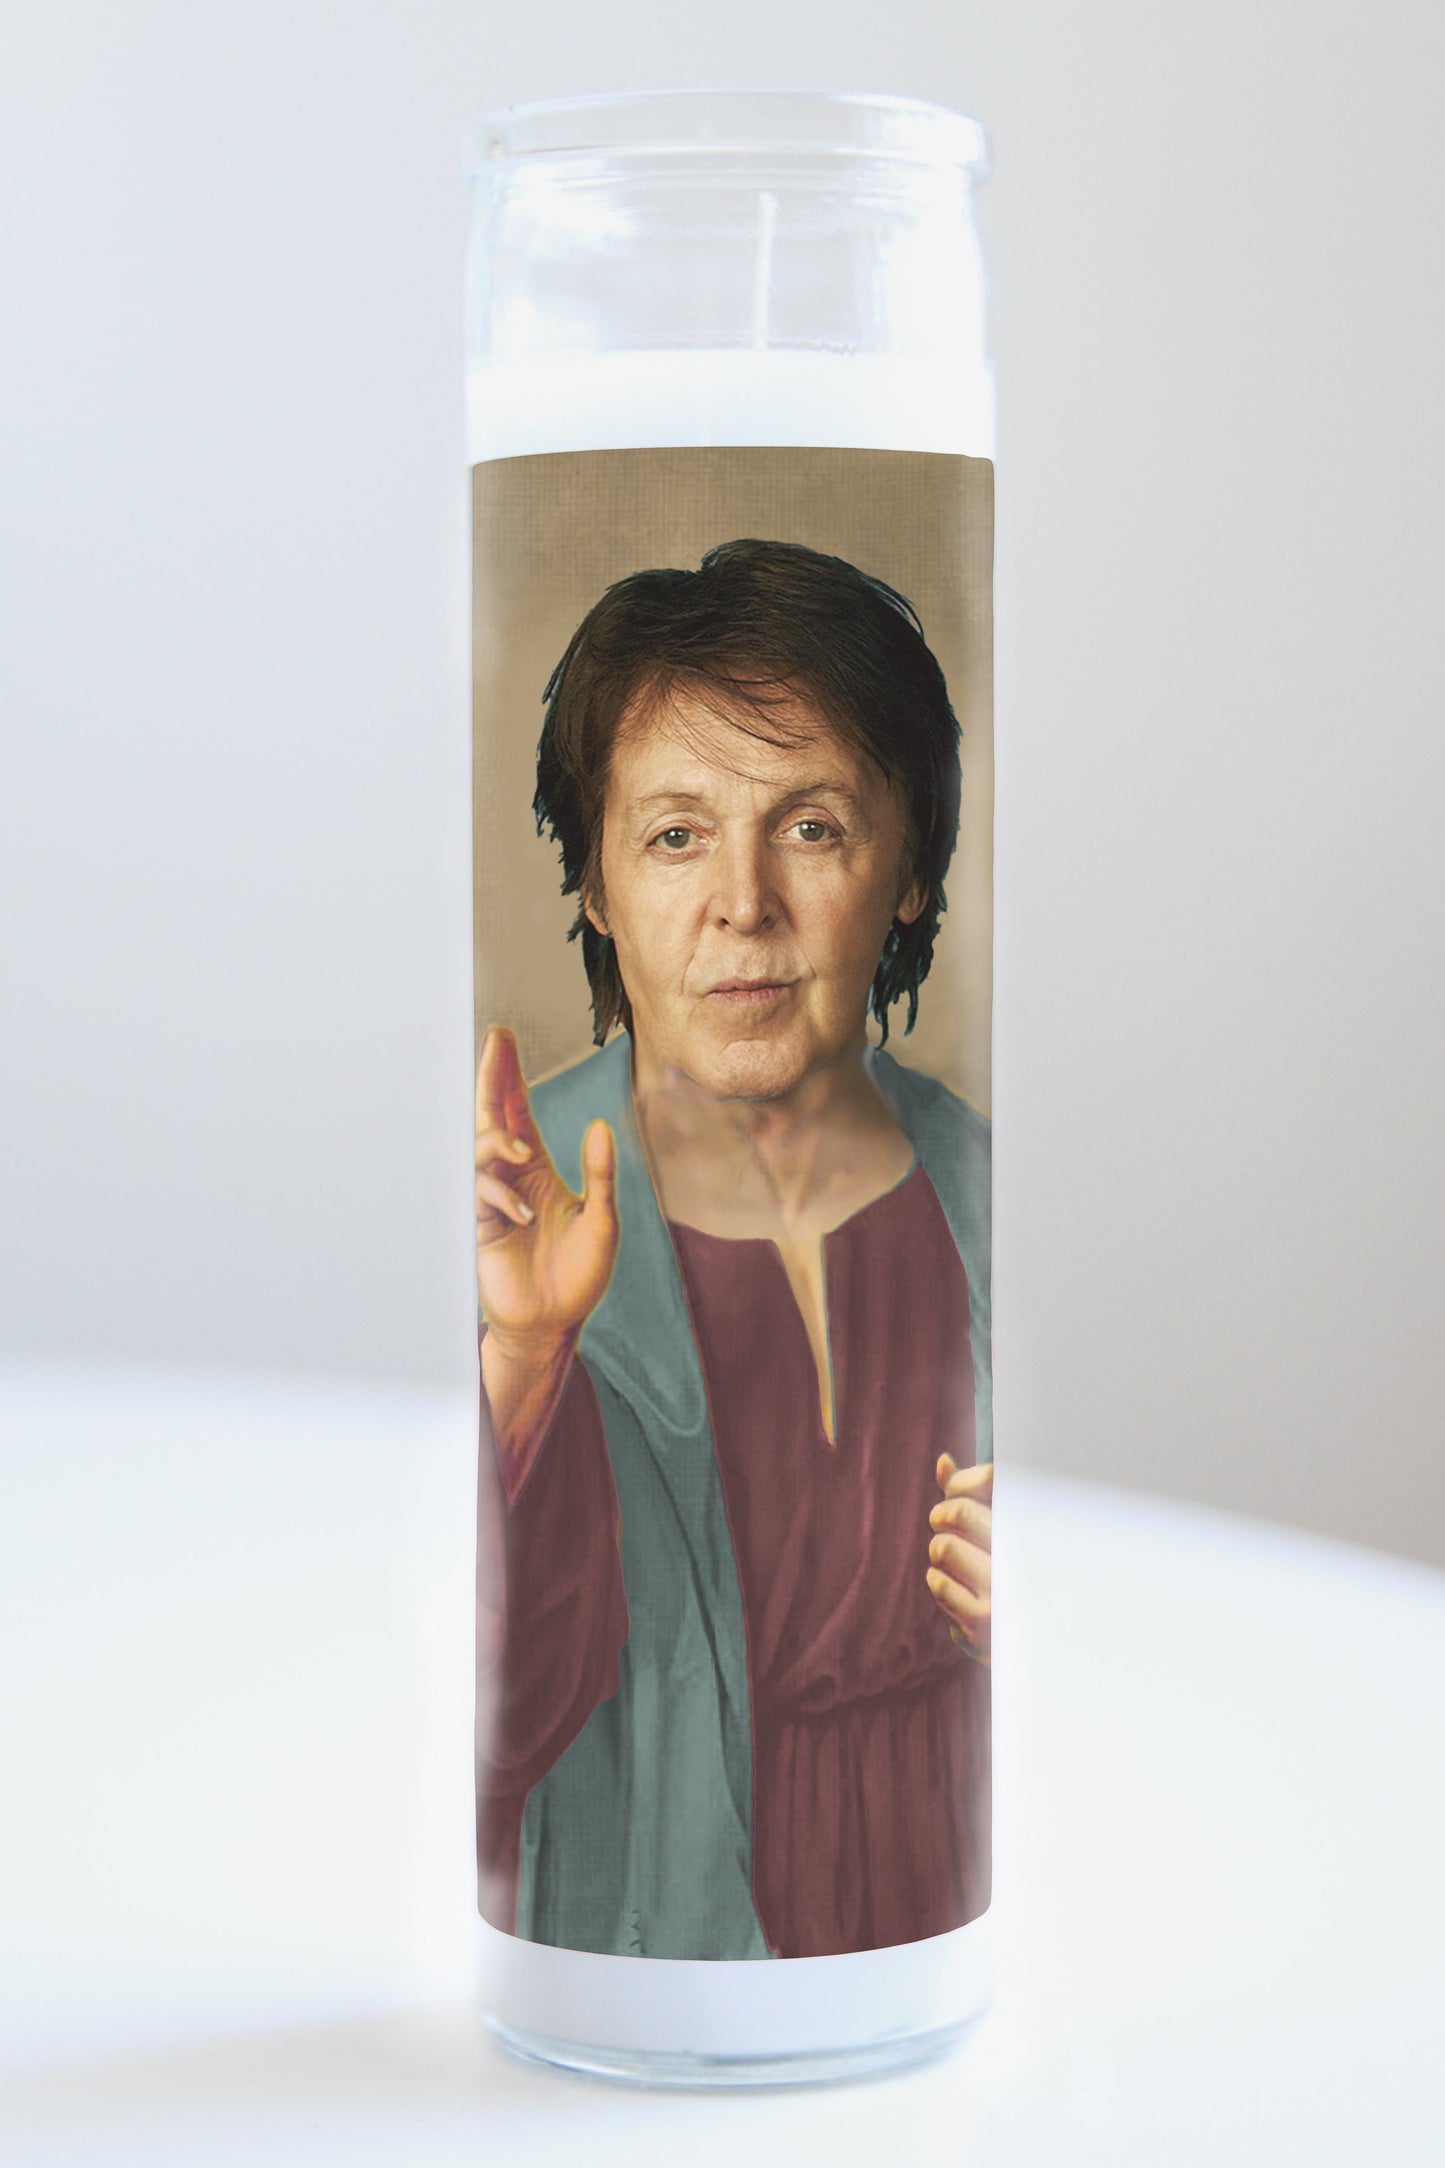 Paul McCartney Maroon Robe Candle